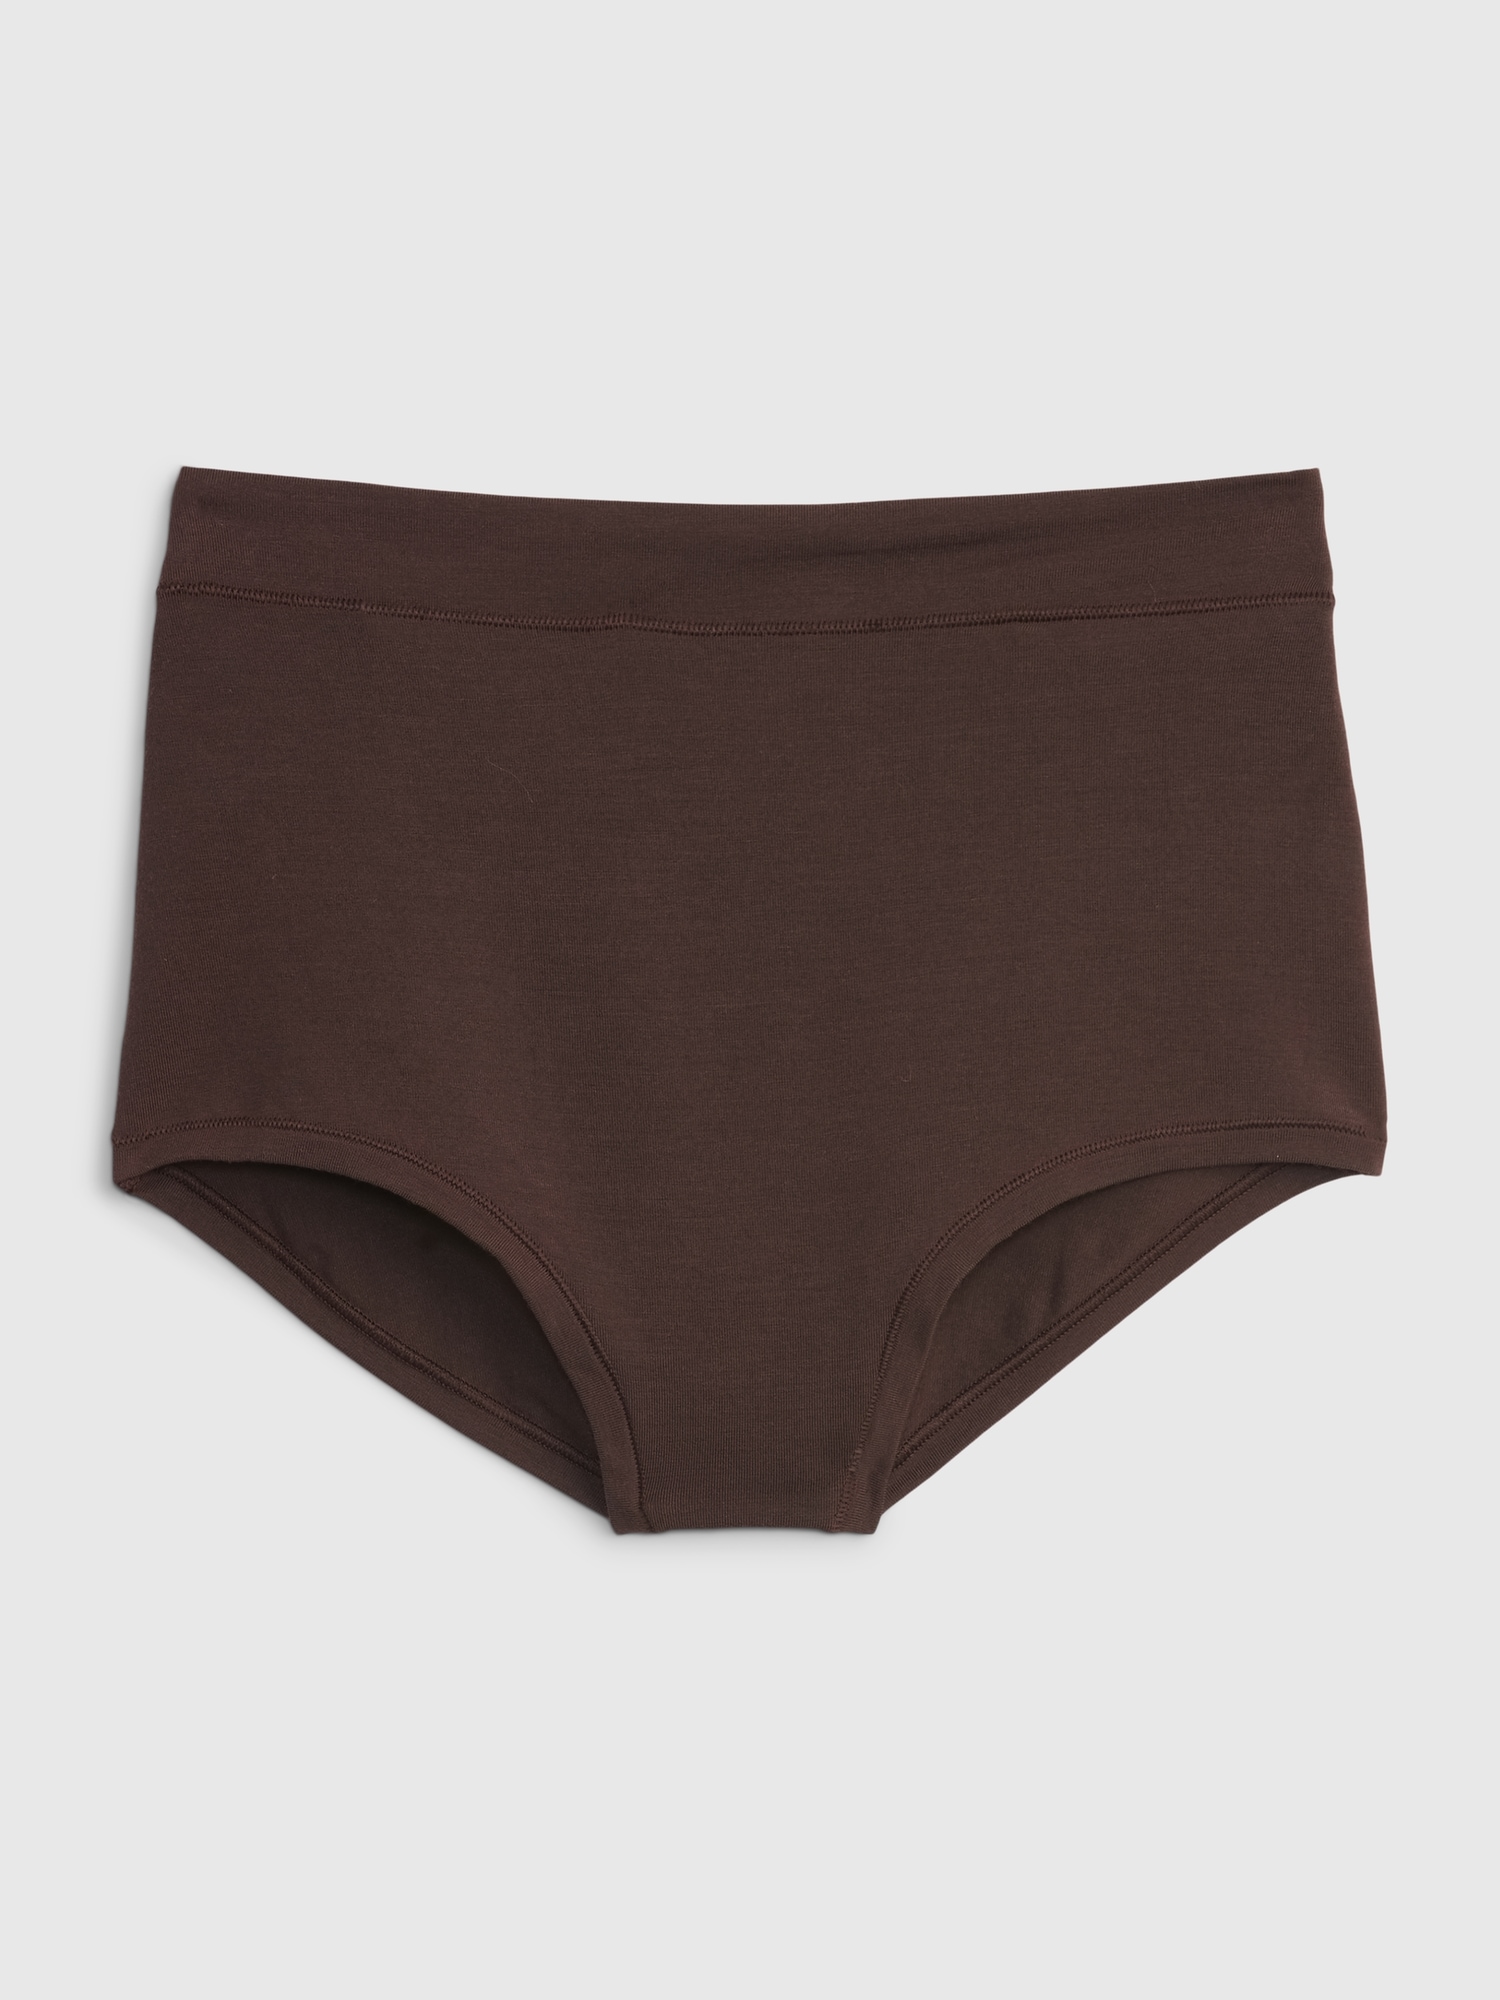 NBB 6 Pack Women's Adjustable Cotton Maternity Underwear High Cut Brief  Panties (Large - 6 Pack, Black)